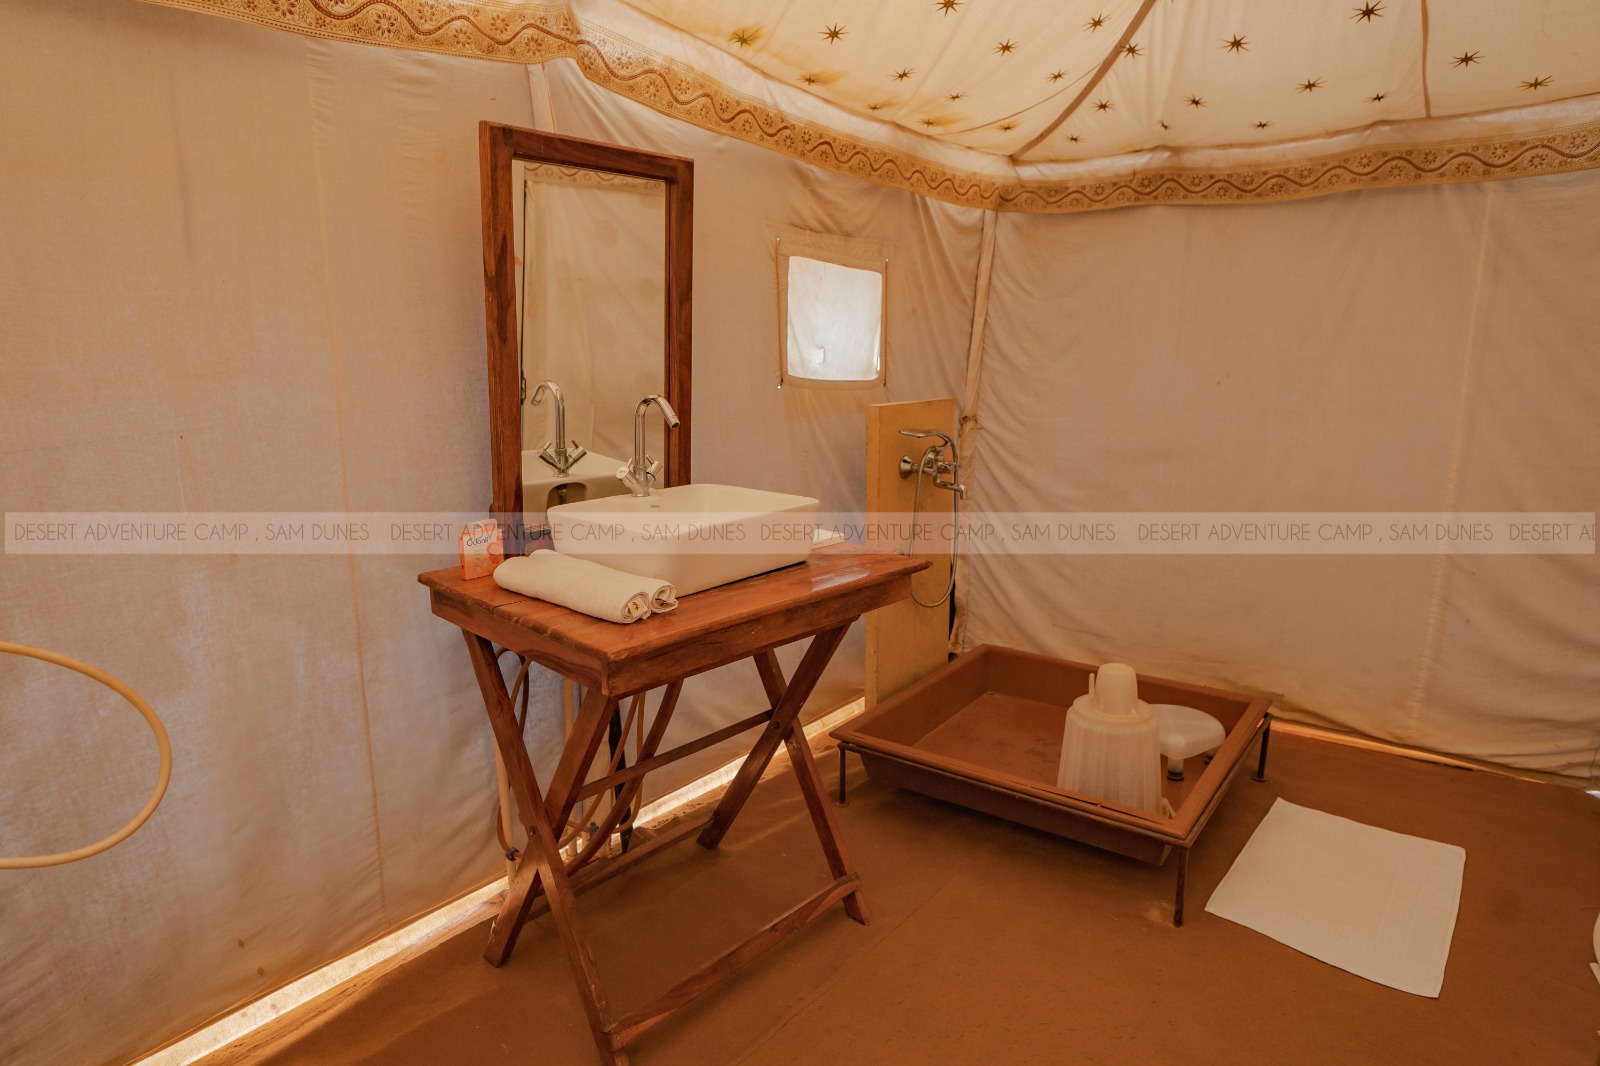 Desert Adventure Camp, Jaisalmer